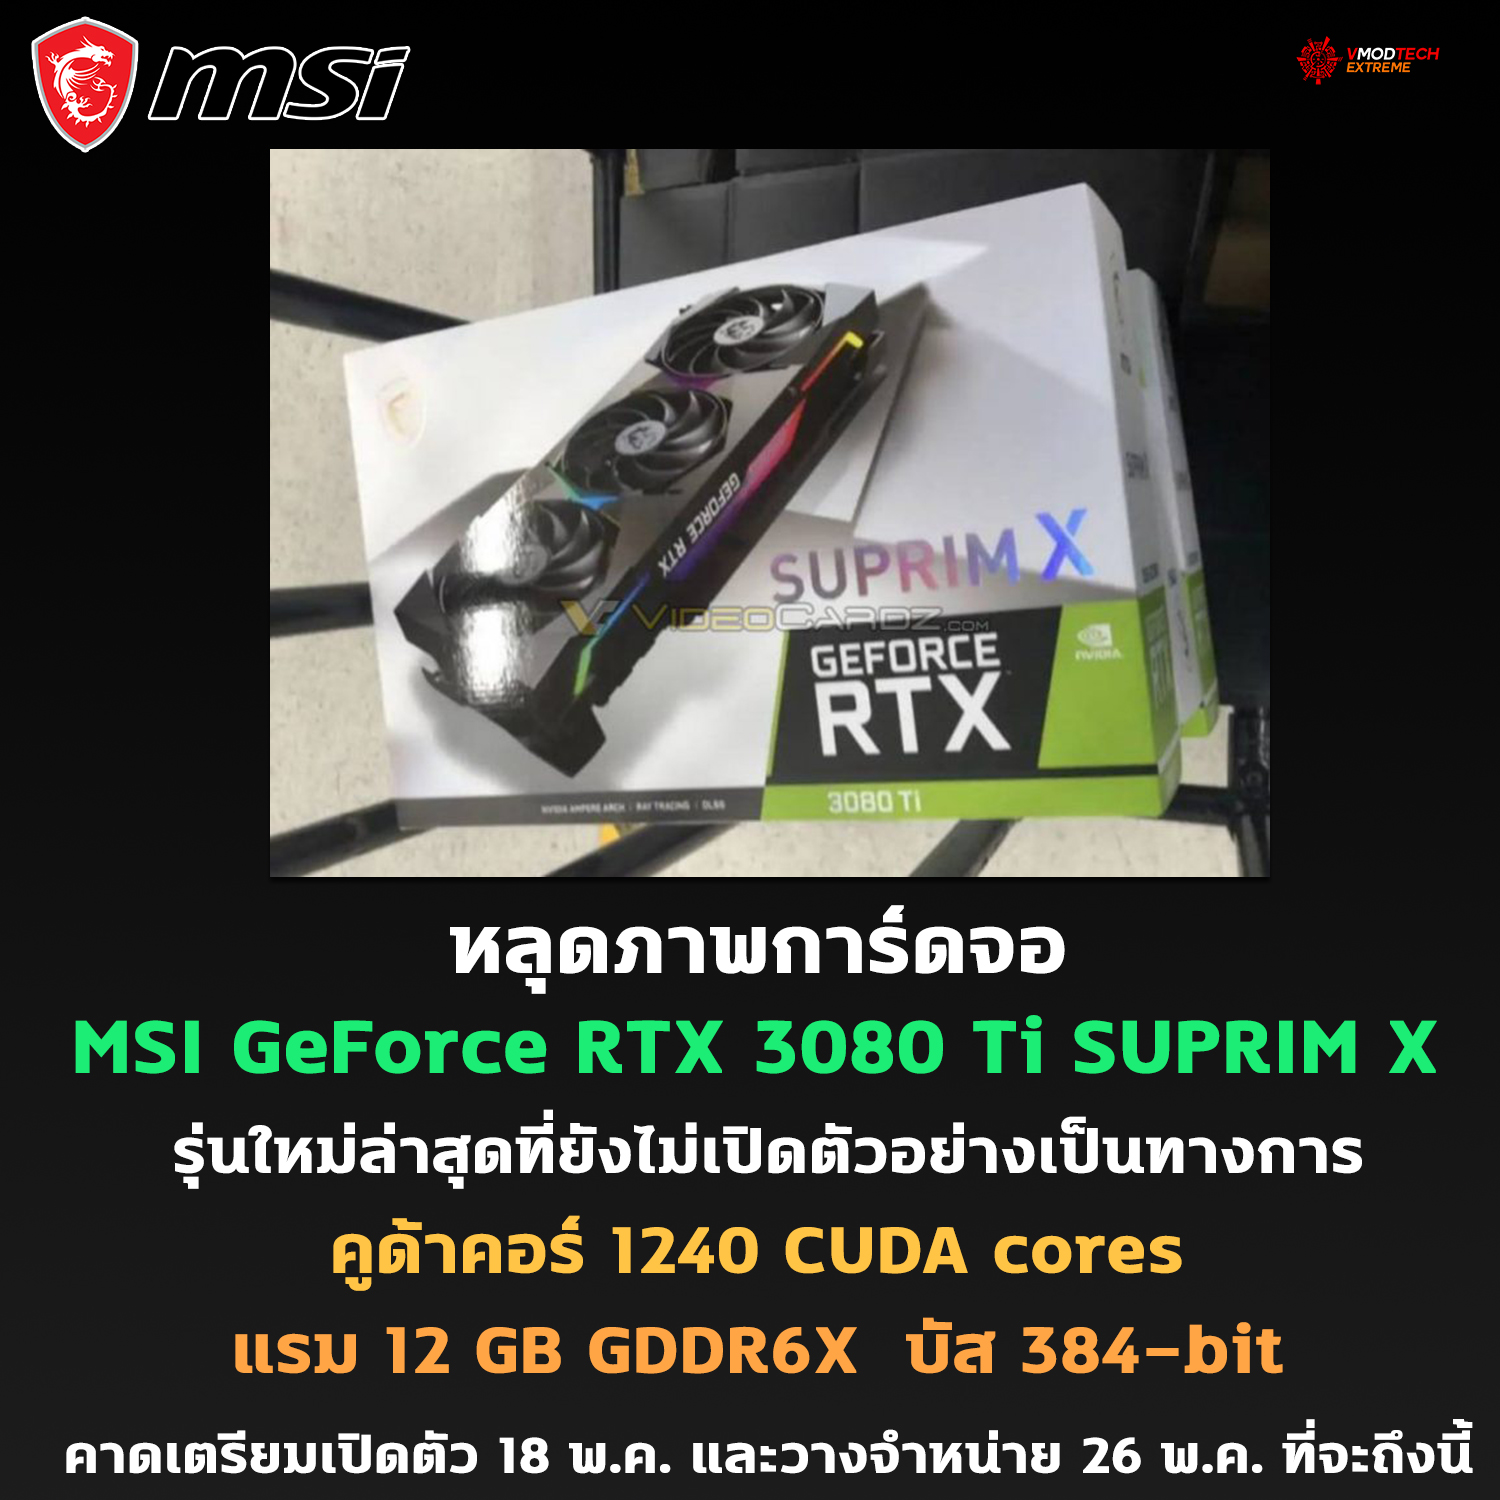 msi geforce rtx 3080 ti suprim x หลุดภาพการ์ดจอ MSI GeForce RTX 3080 Ti SUPRIM X รุ่นใหม่ล่าสุดที่ยังไม่เปิดตัวอย่างเป็นทางการ